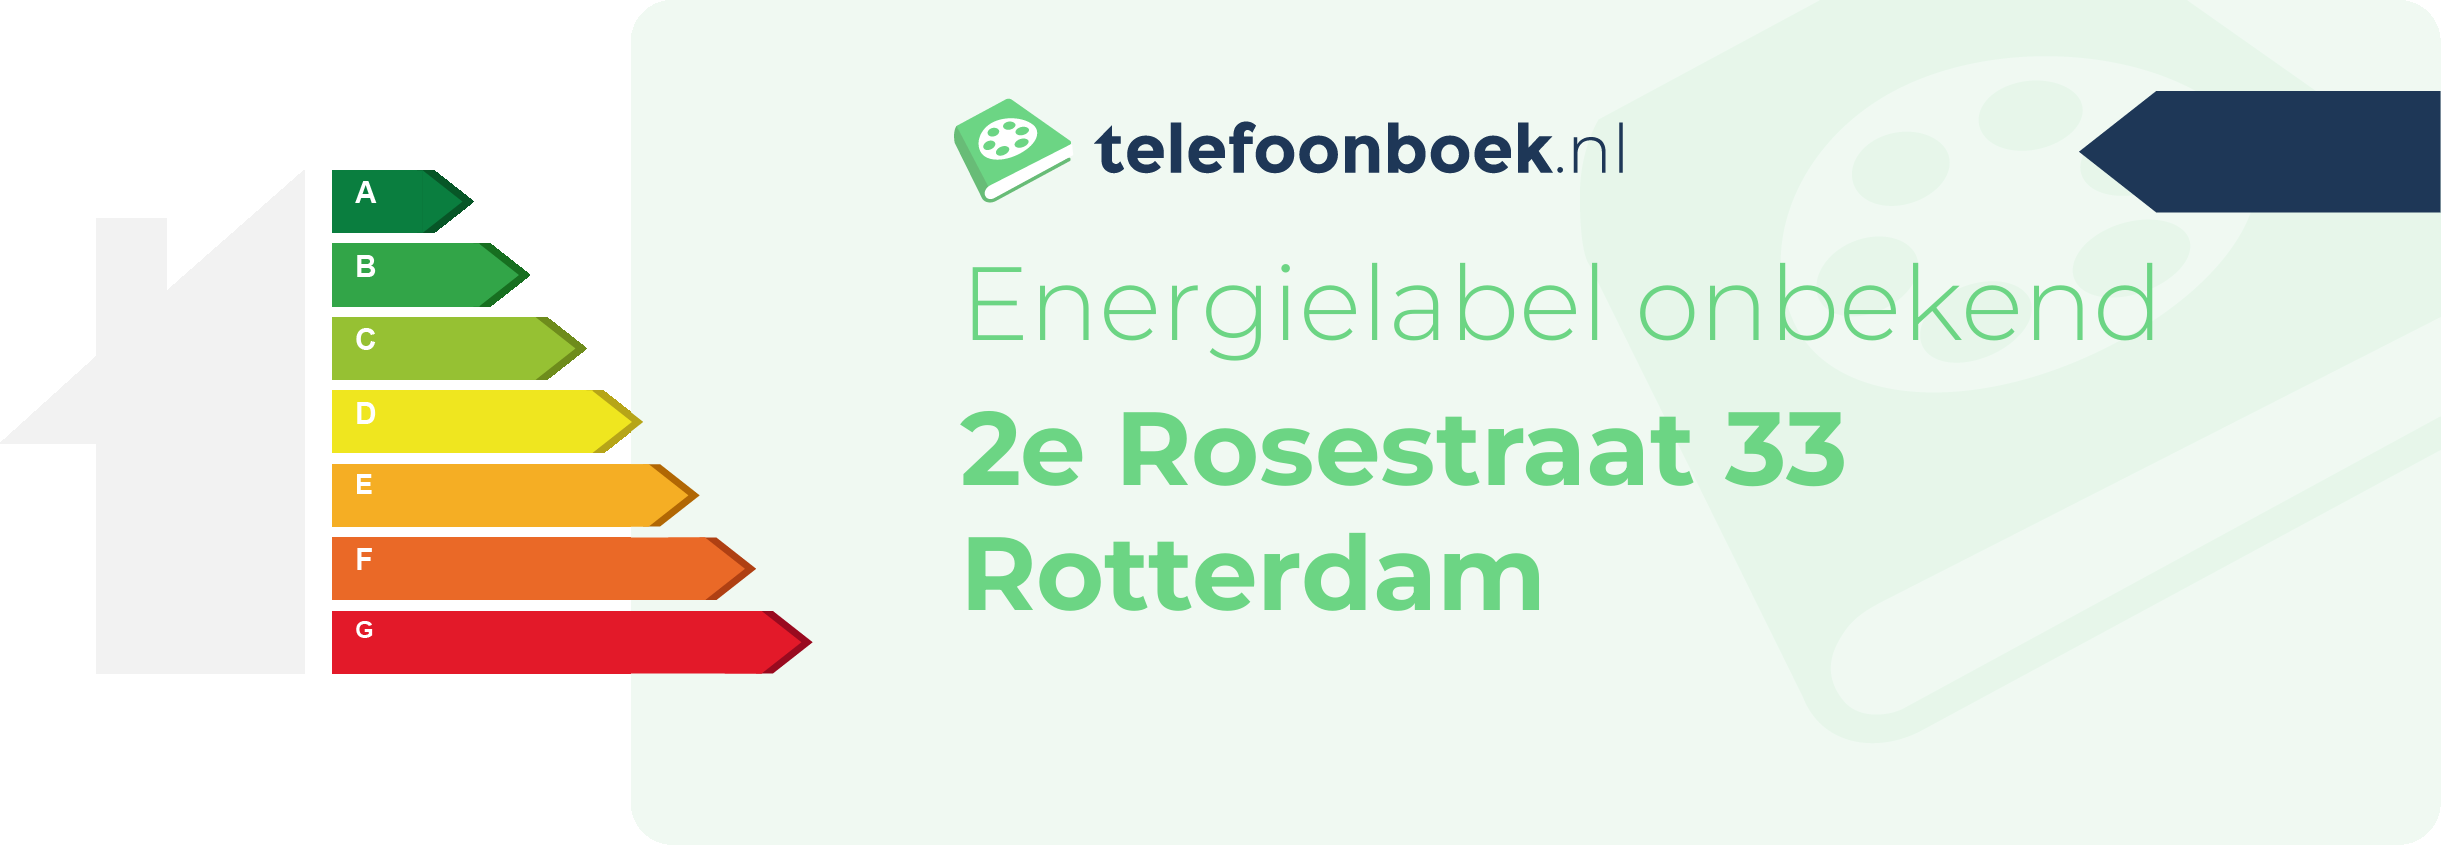 Energielabel 2e Rosestraat 33 Rotterdam